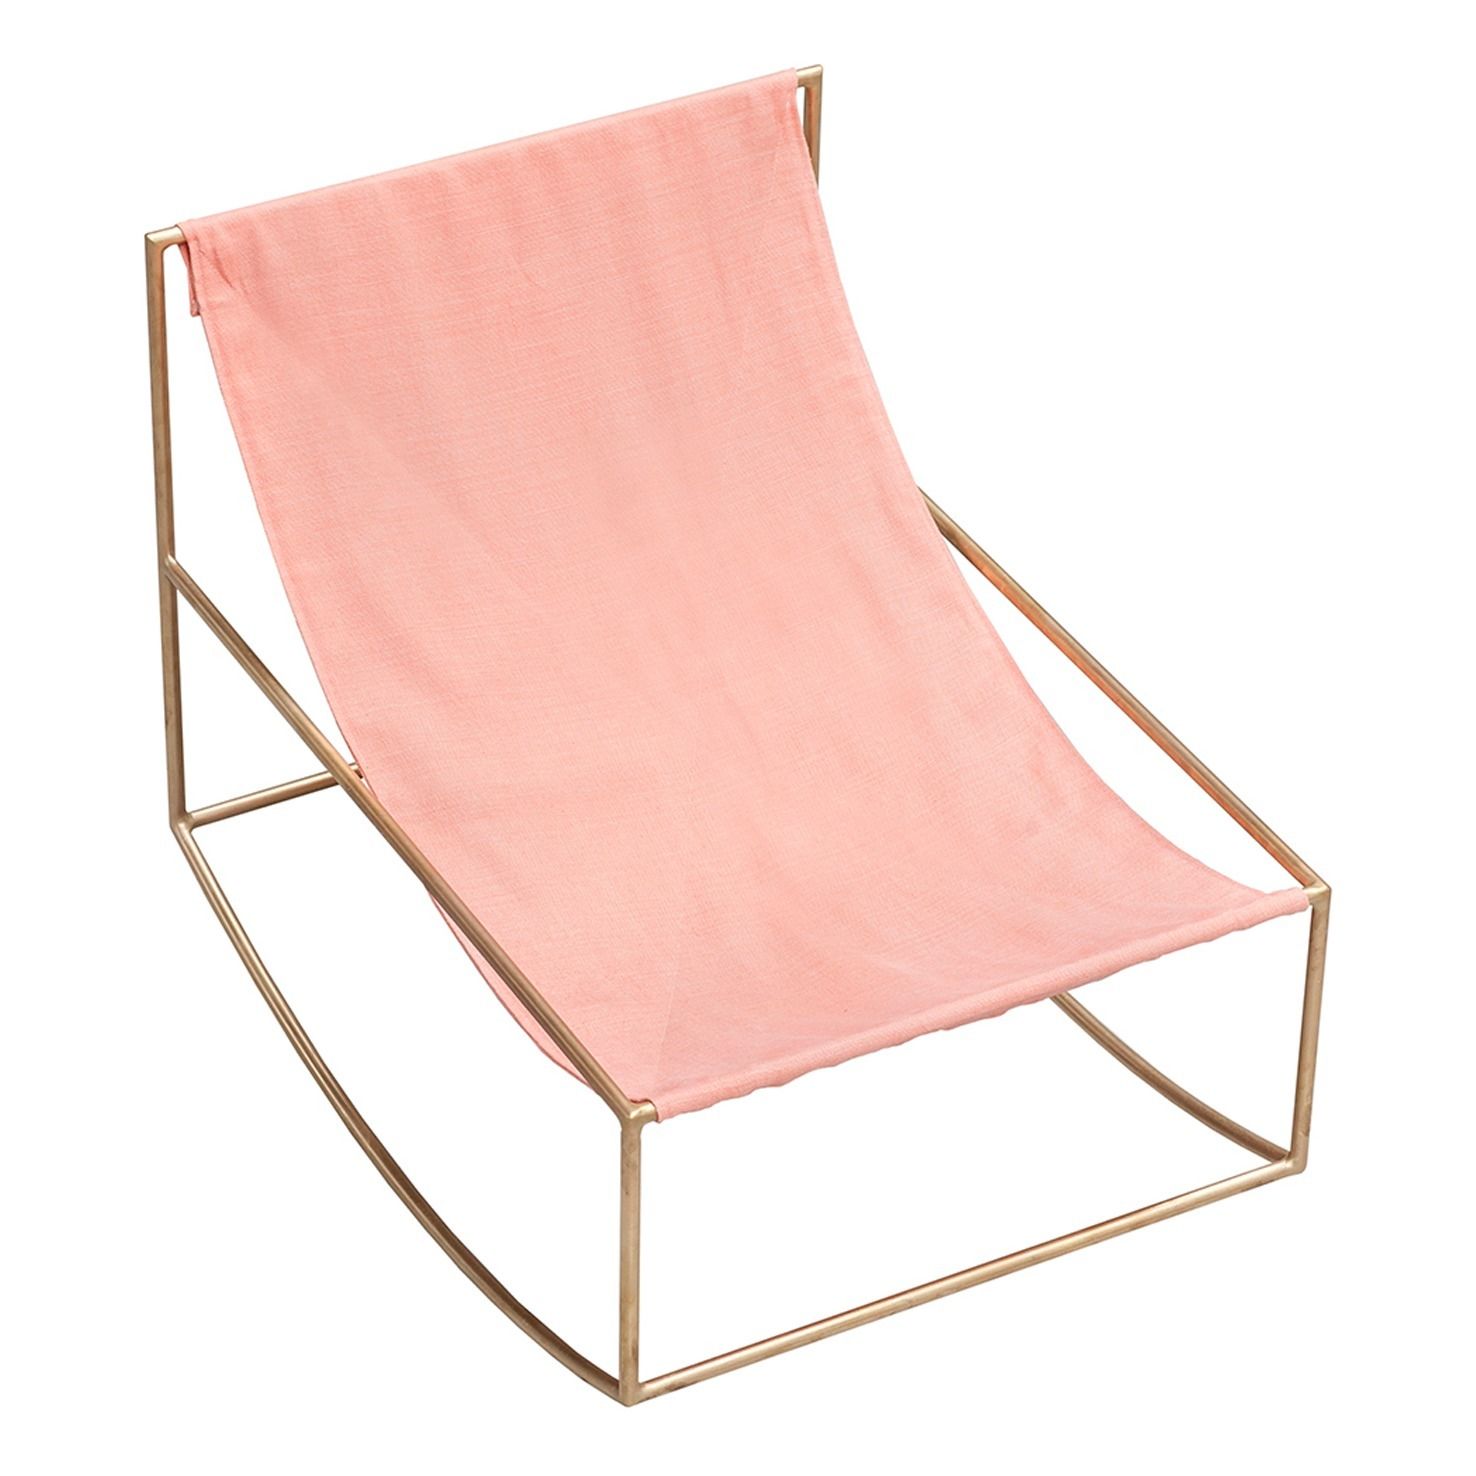 Valerie Objects - Fauteuil en lin Rocking Chair - Rose